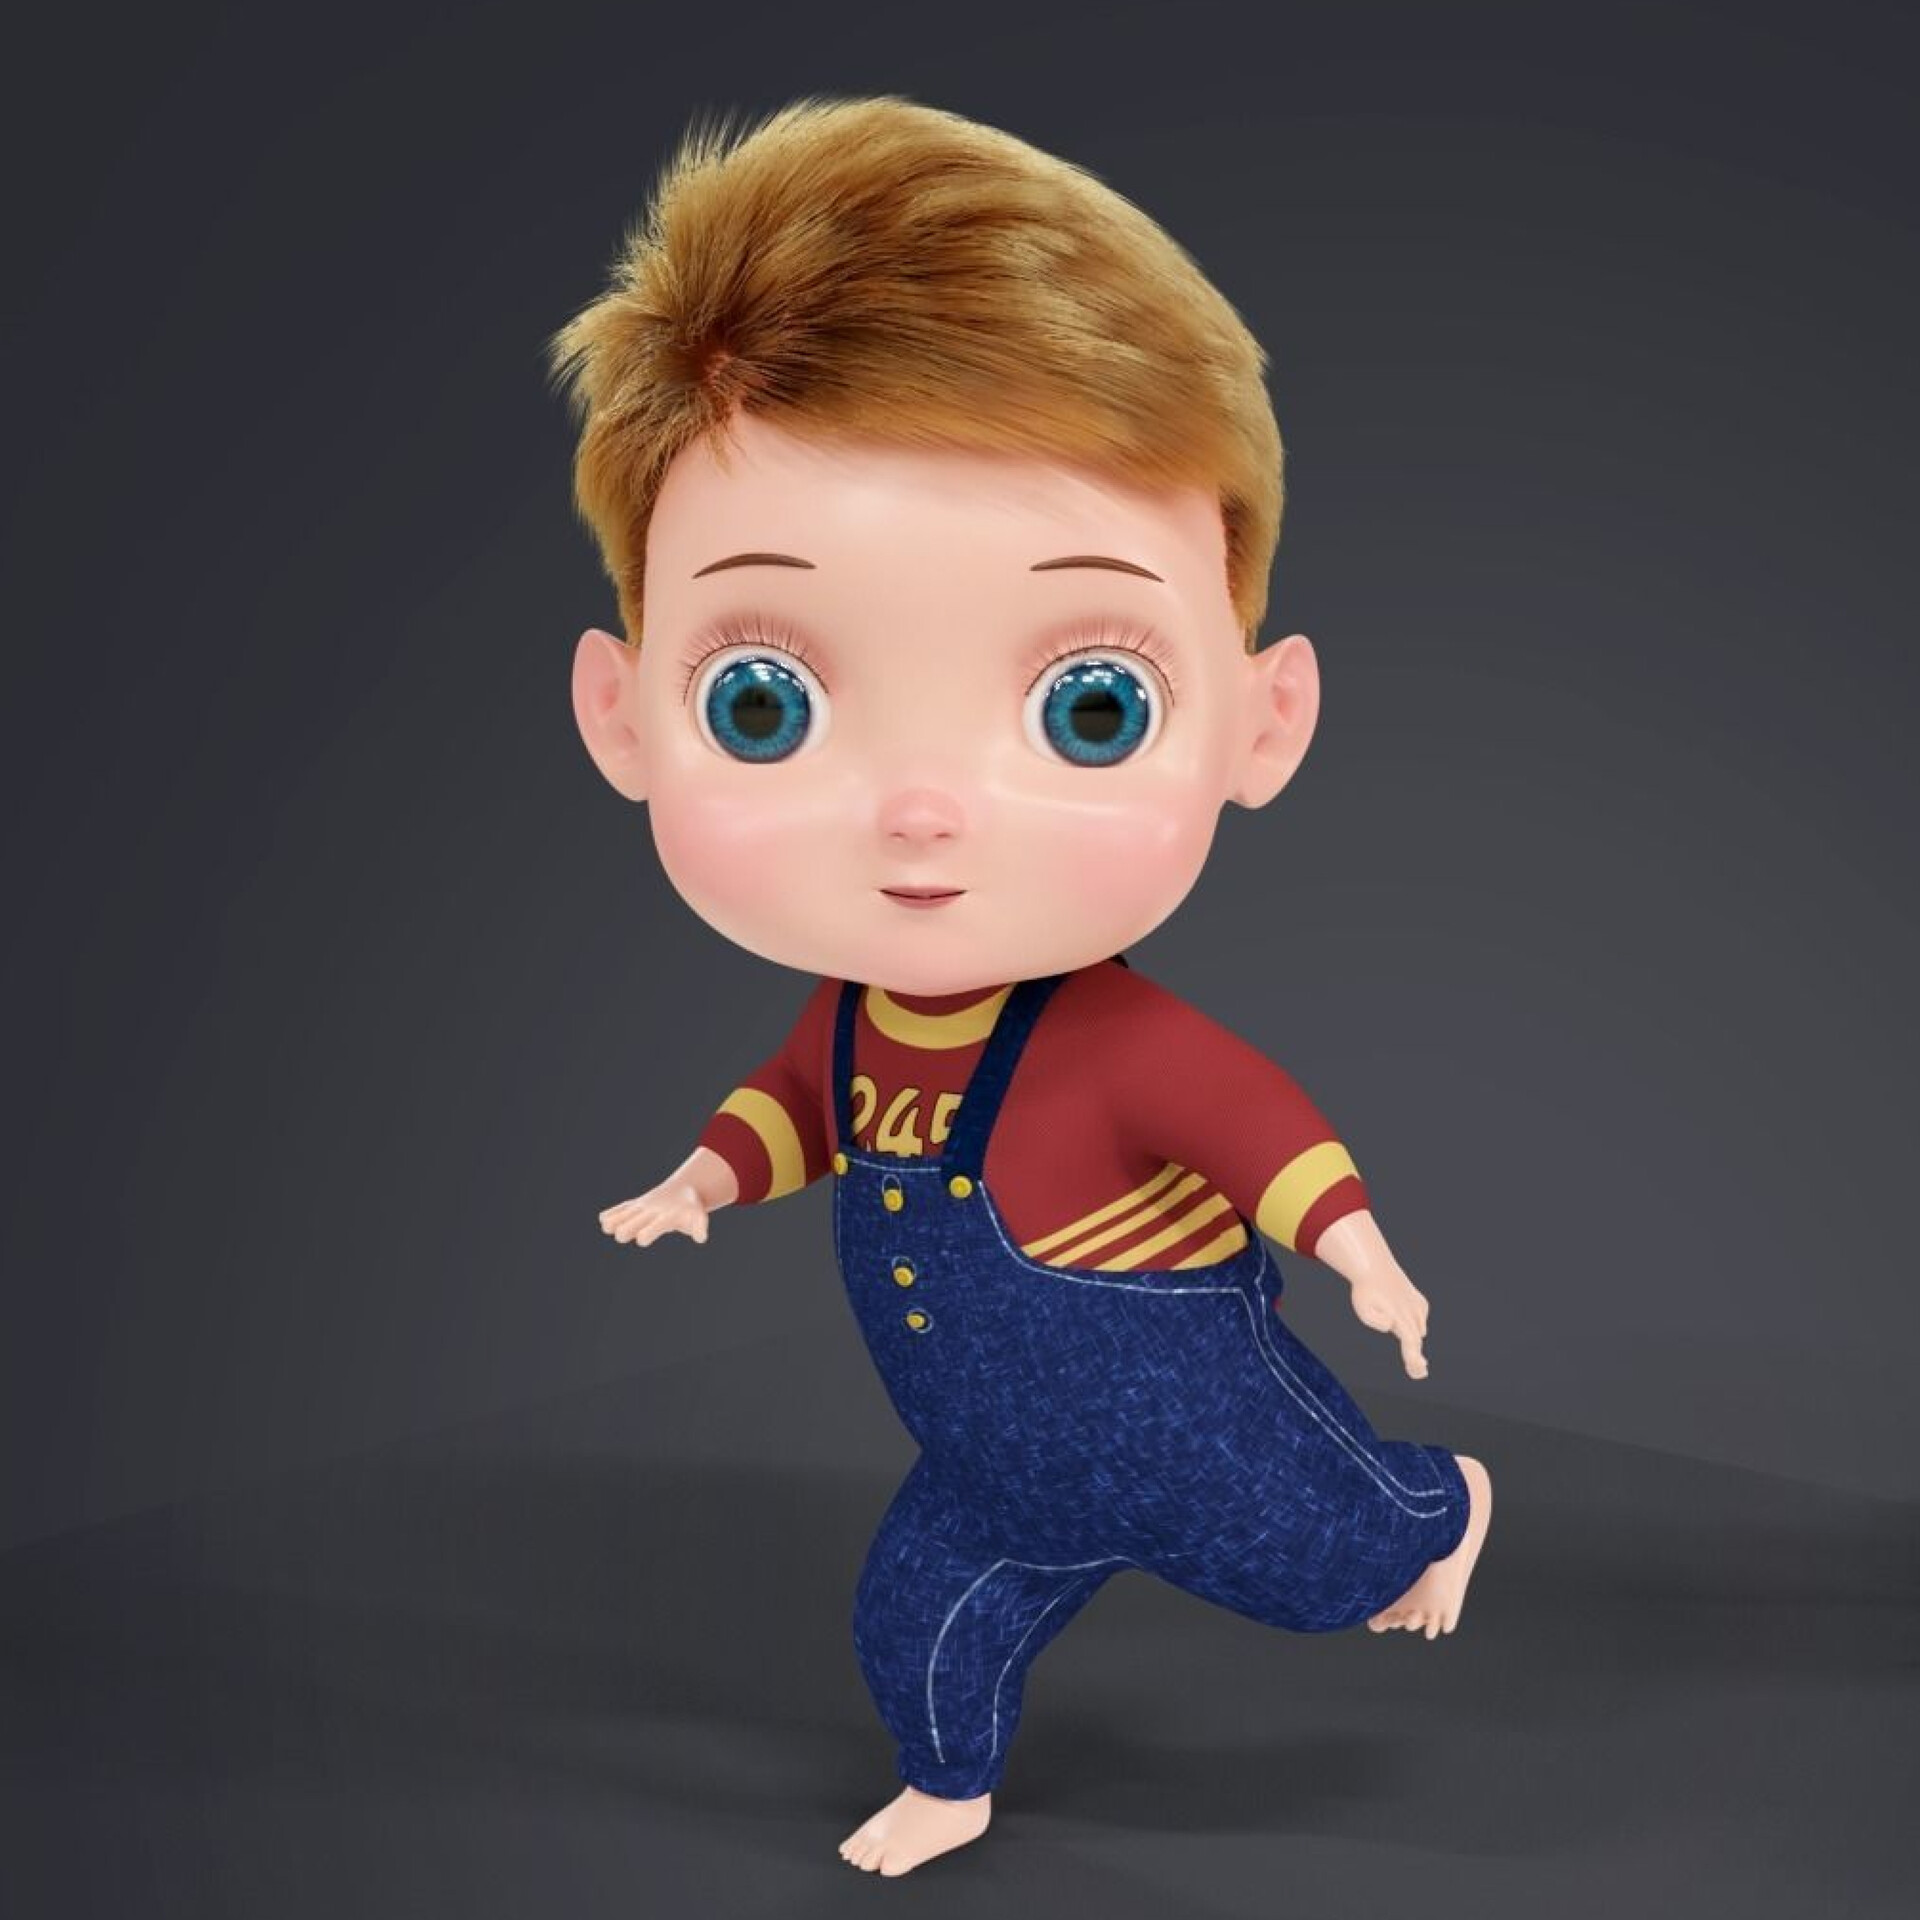 ArtStation - Cartoon Fur Baby Boy Cute Character Rigged in Blender